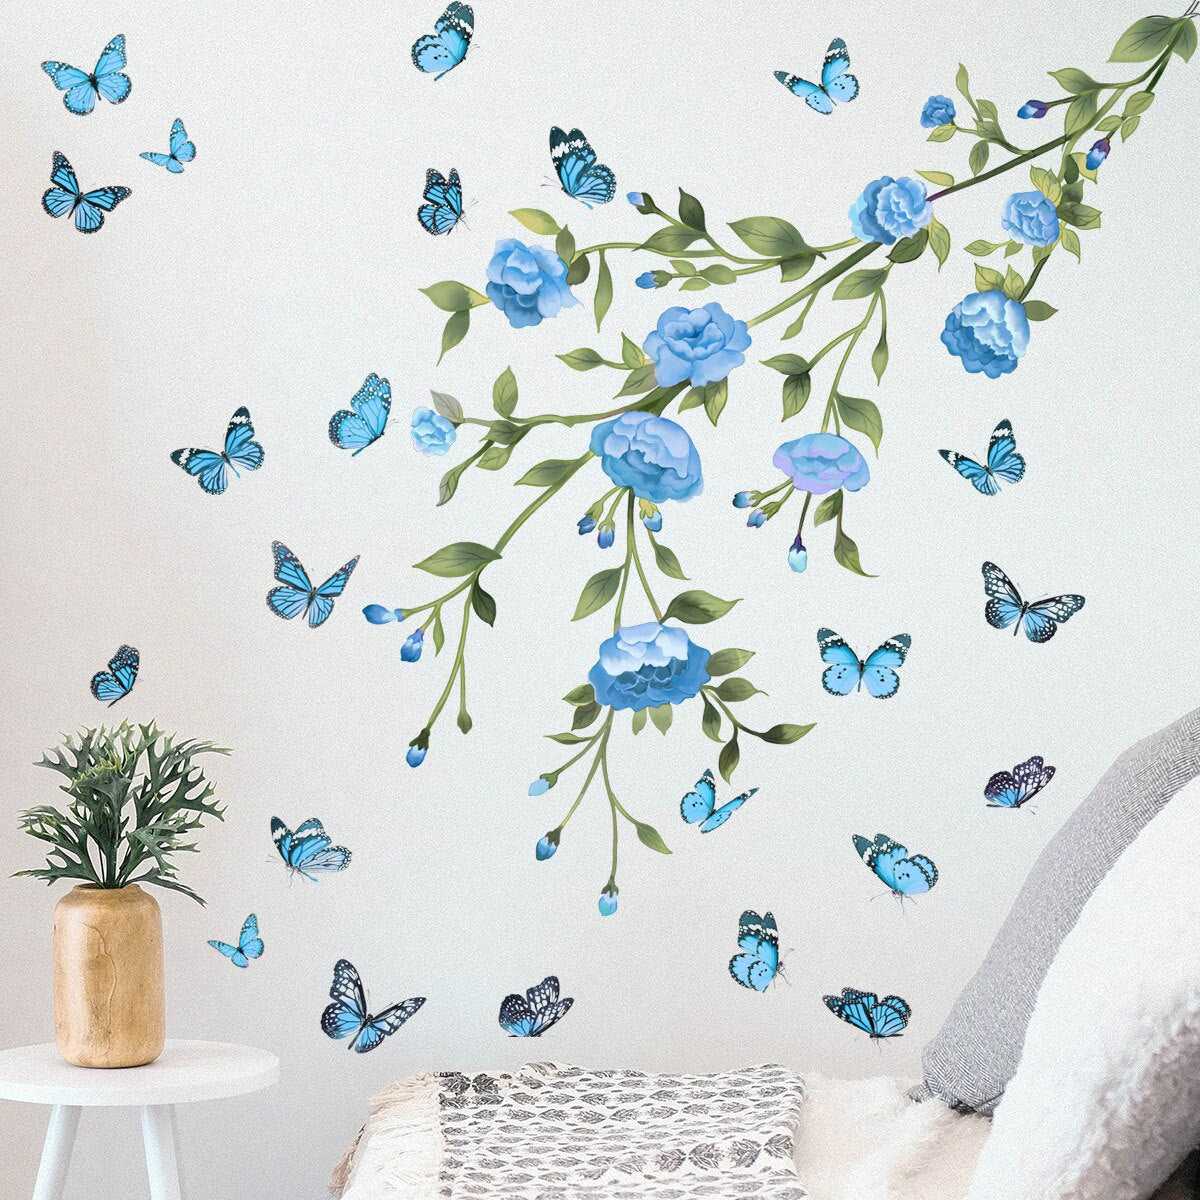 Flowers Butterflies Wall Stickers | Living Room Bathroom Wall Furniture Door House Interior Decor